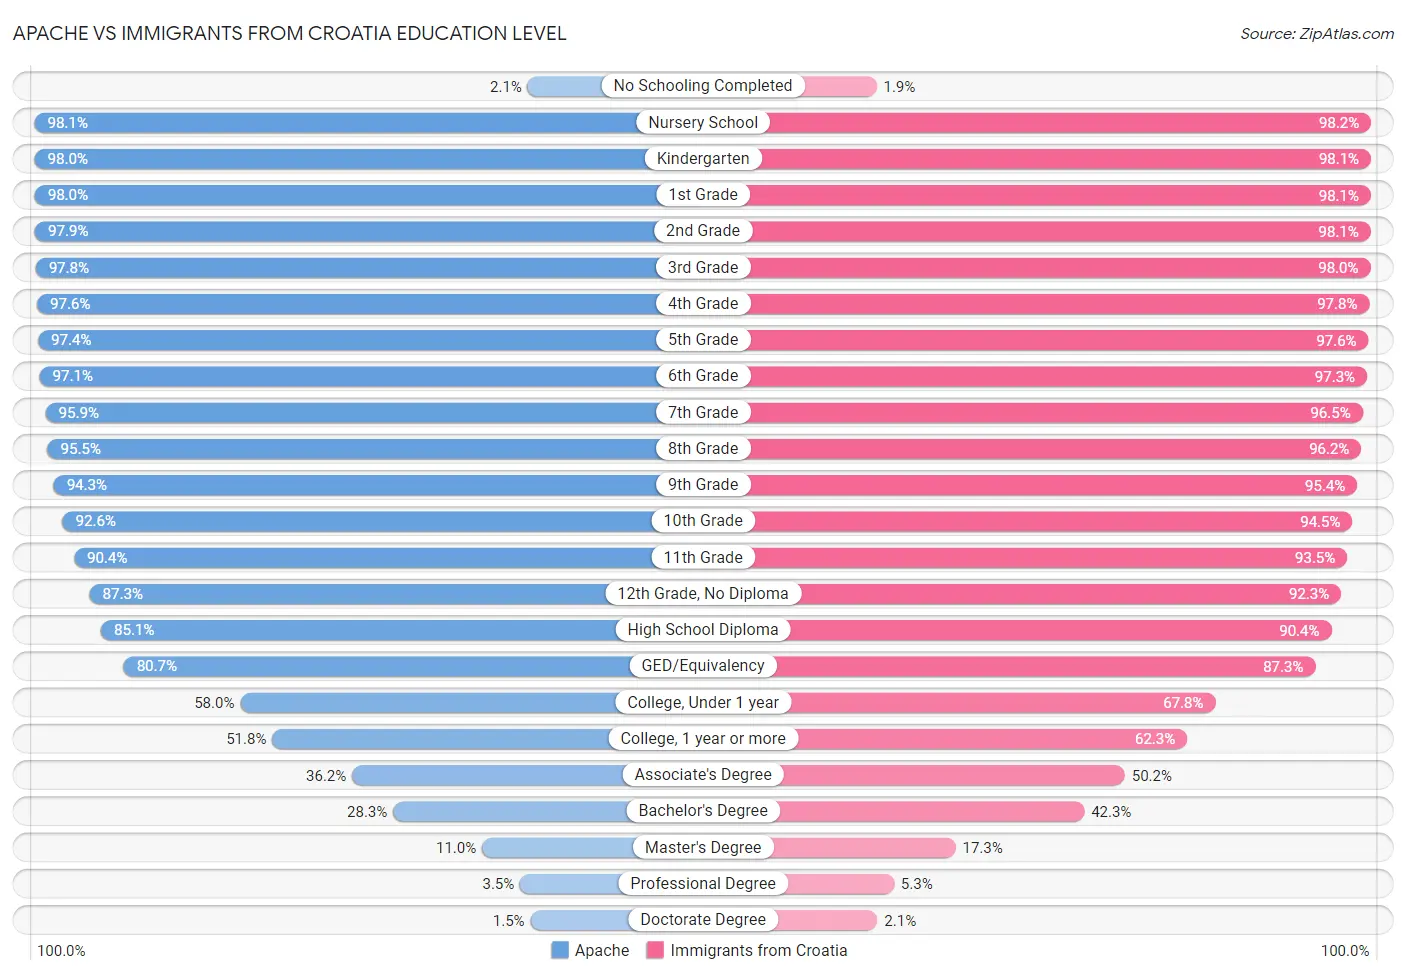 Apache vs Immigrants from Croatia Education Level